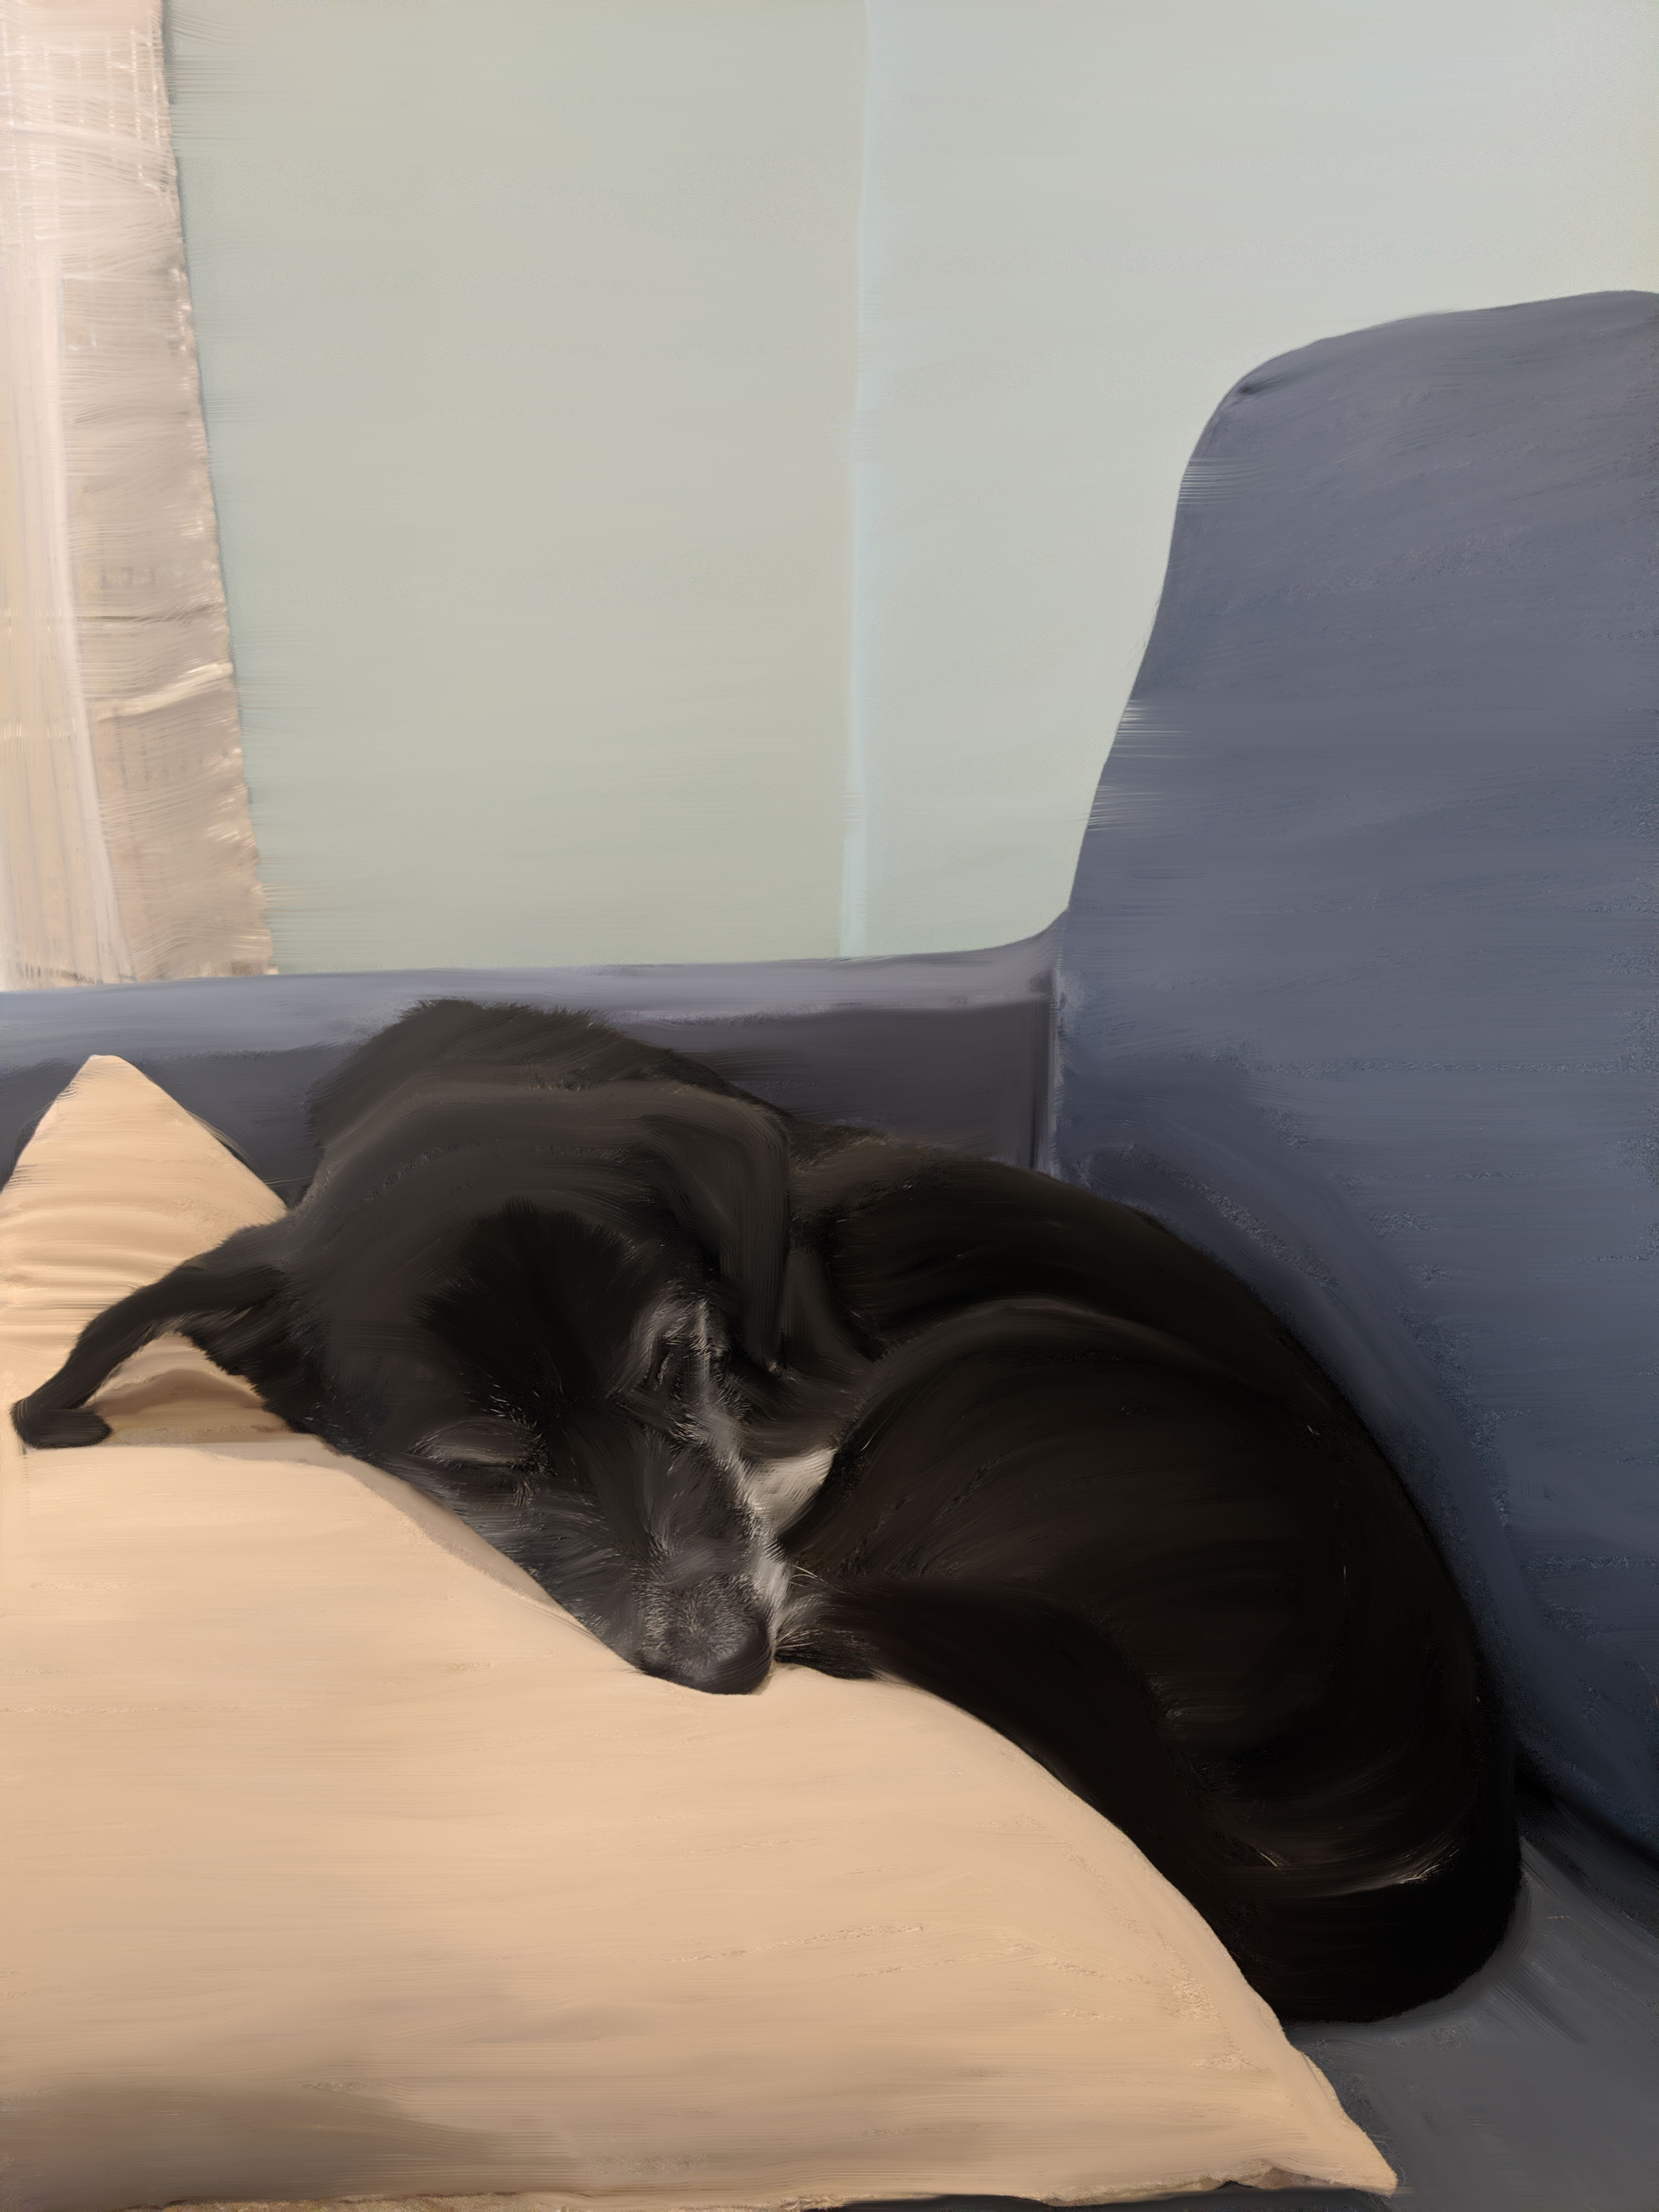 An image of a sleeping dog.